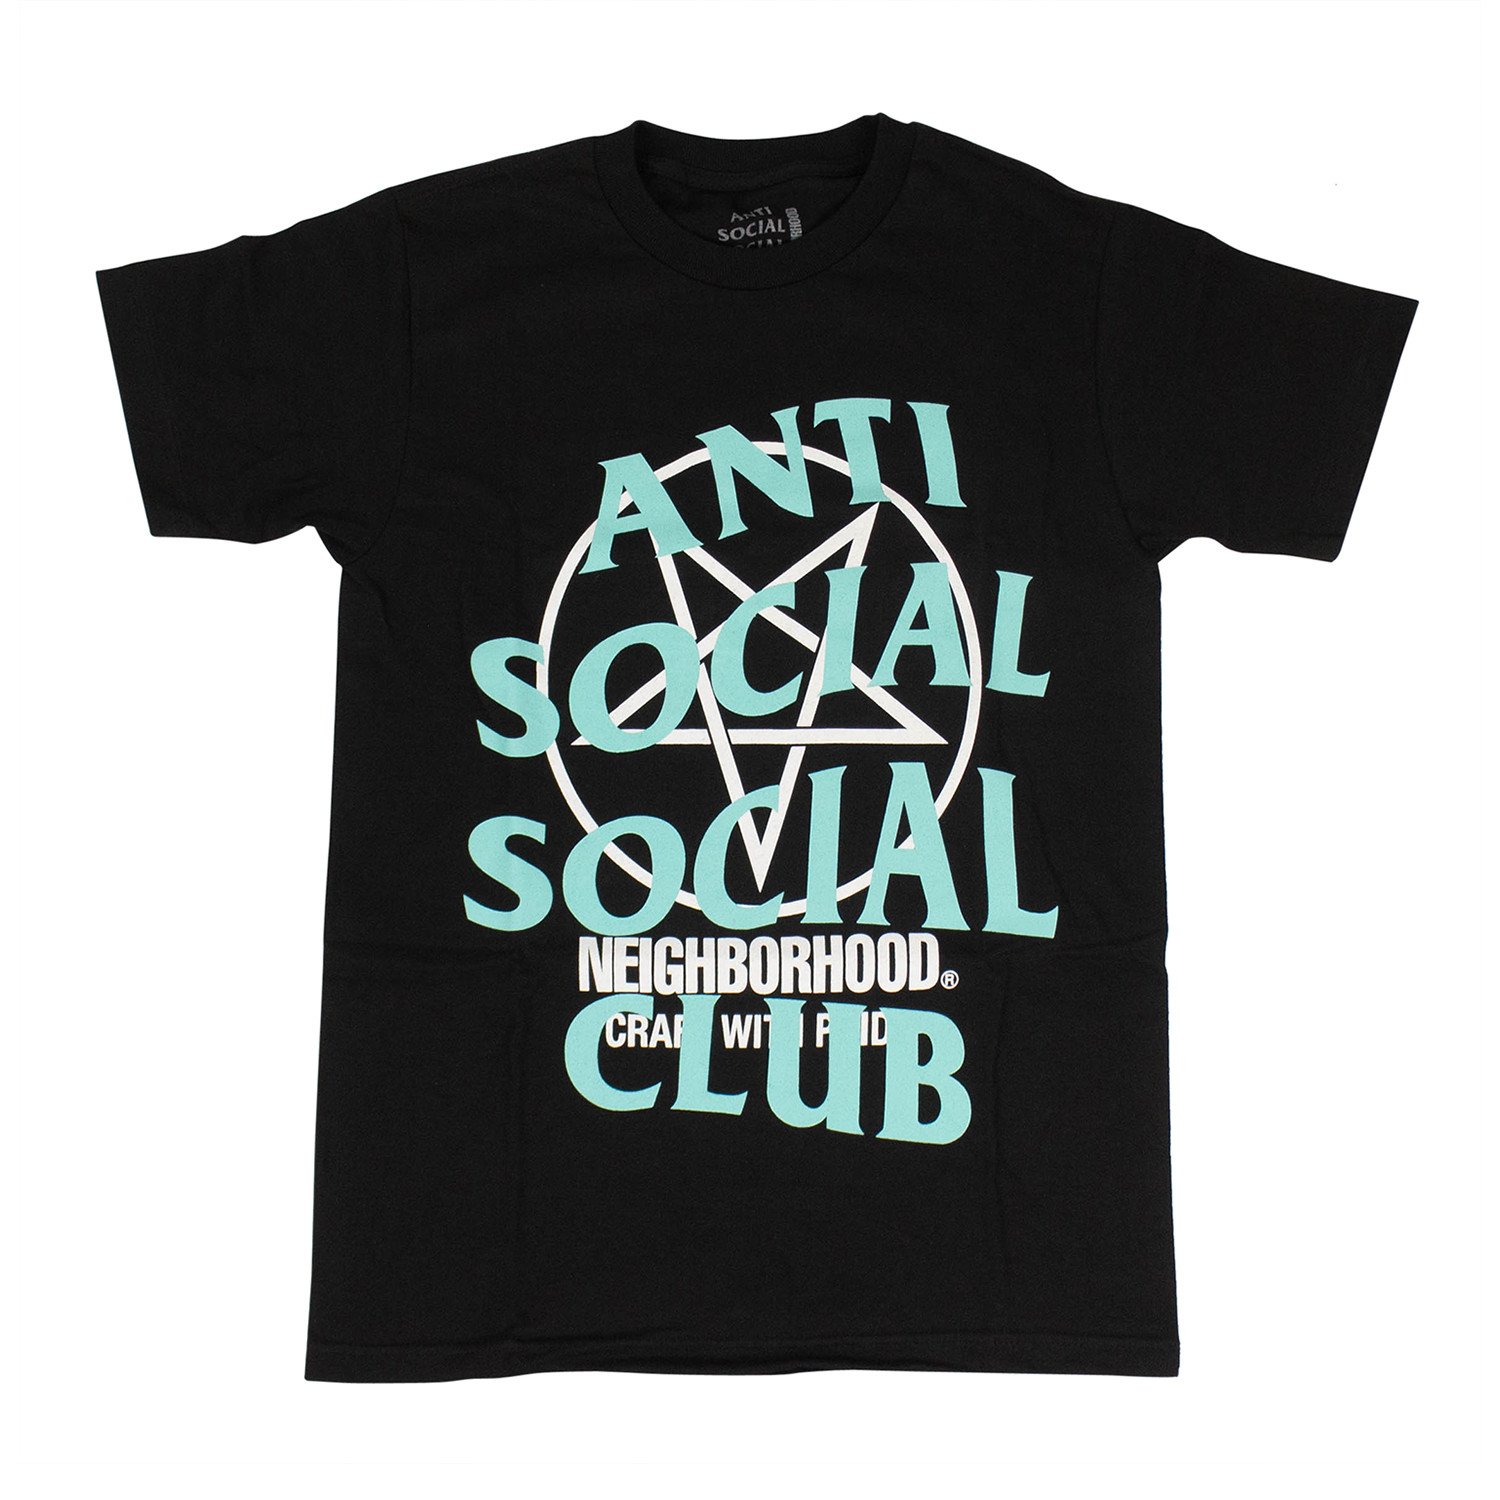 年末早割 Neighborhood Anti social social club tee | artfive.co.jp